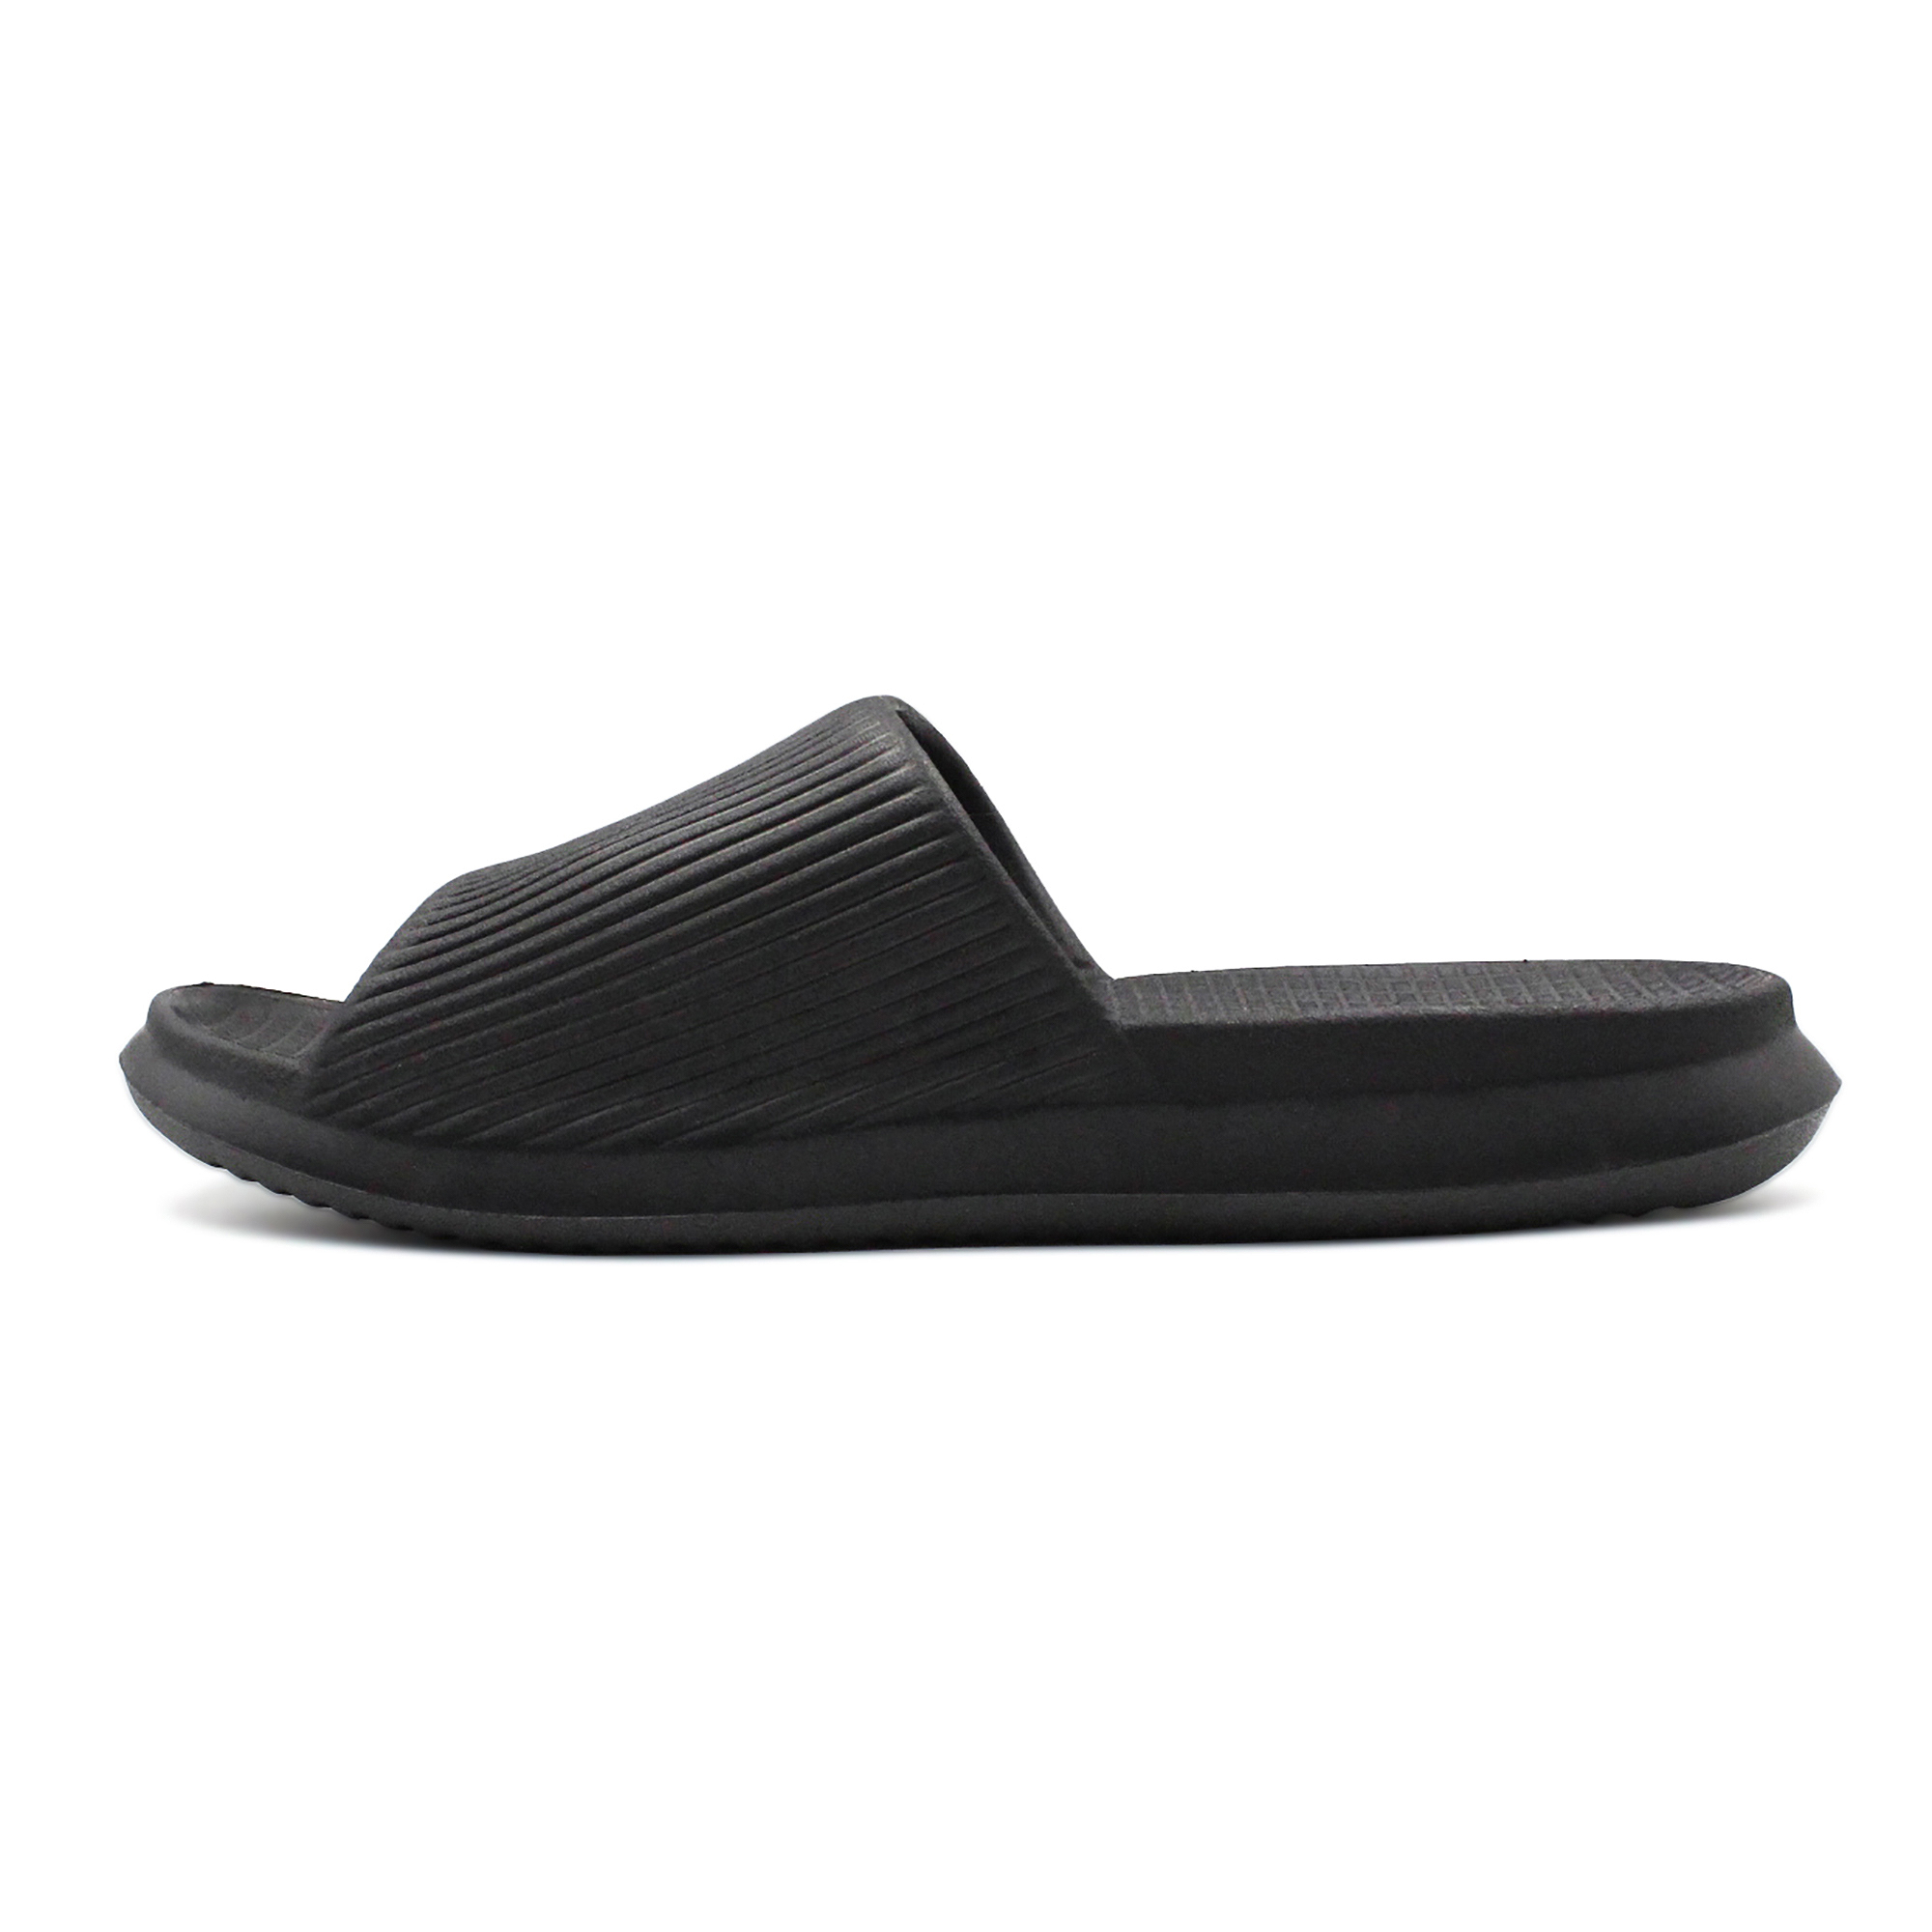 Womens Slides Sports Sandals Beach Summer Shoes | eBay